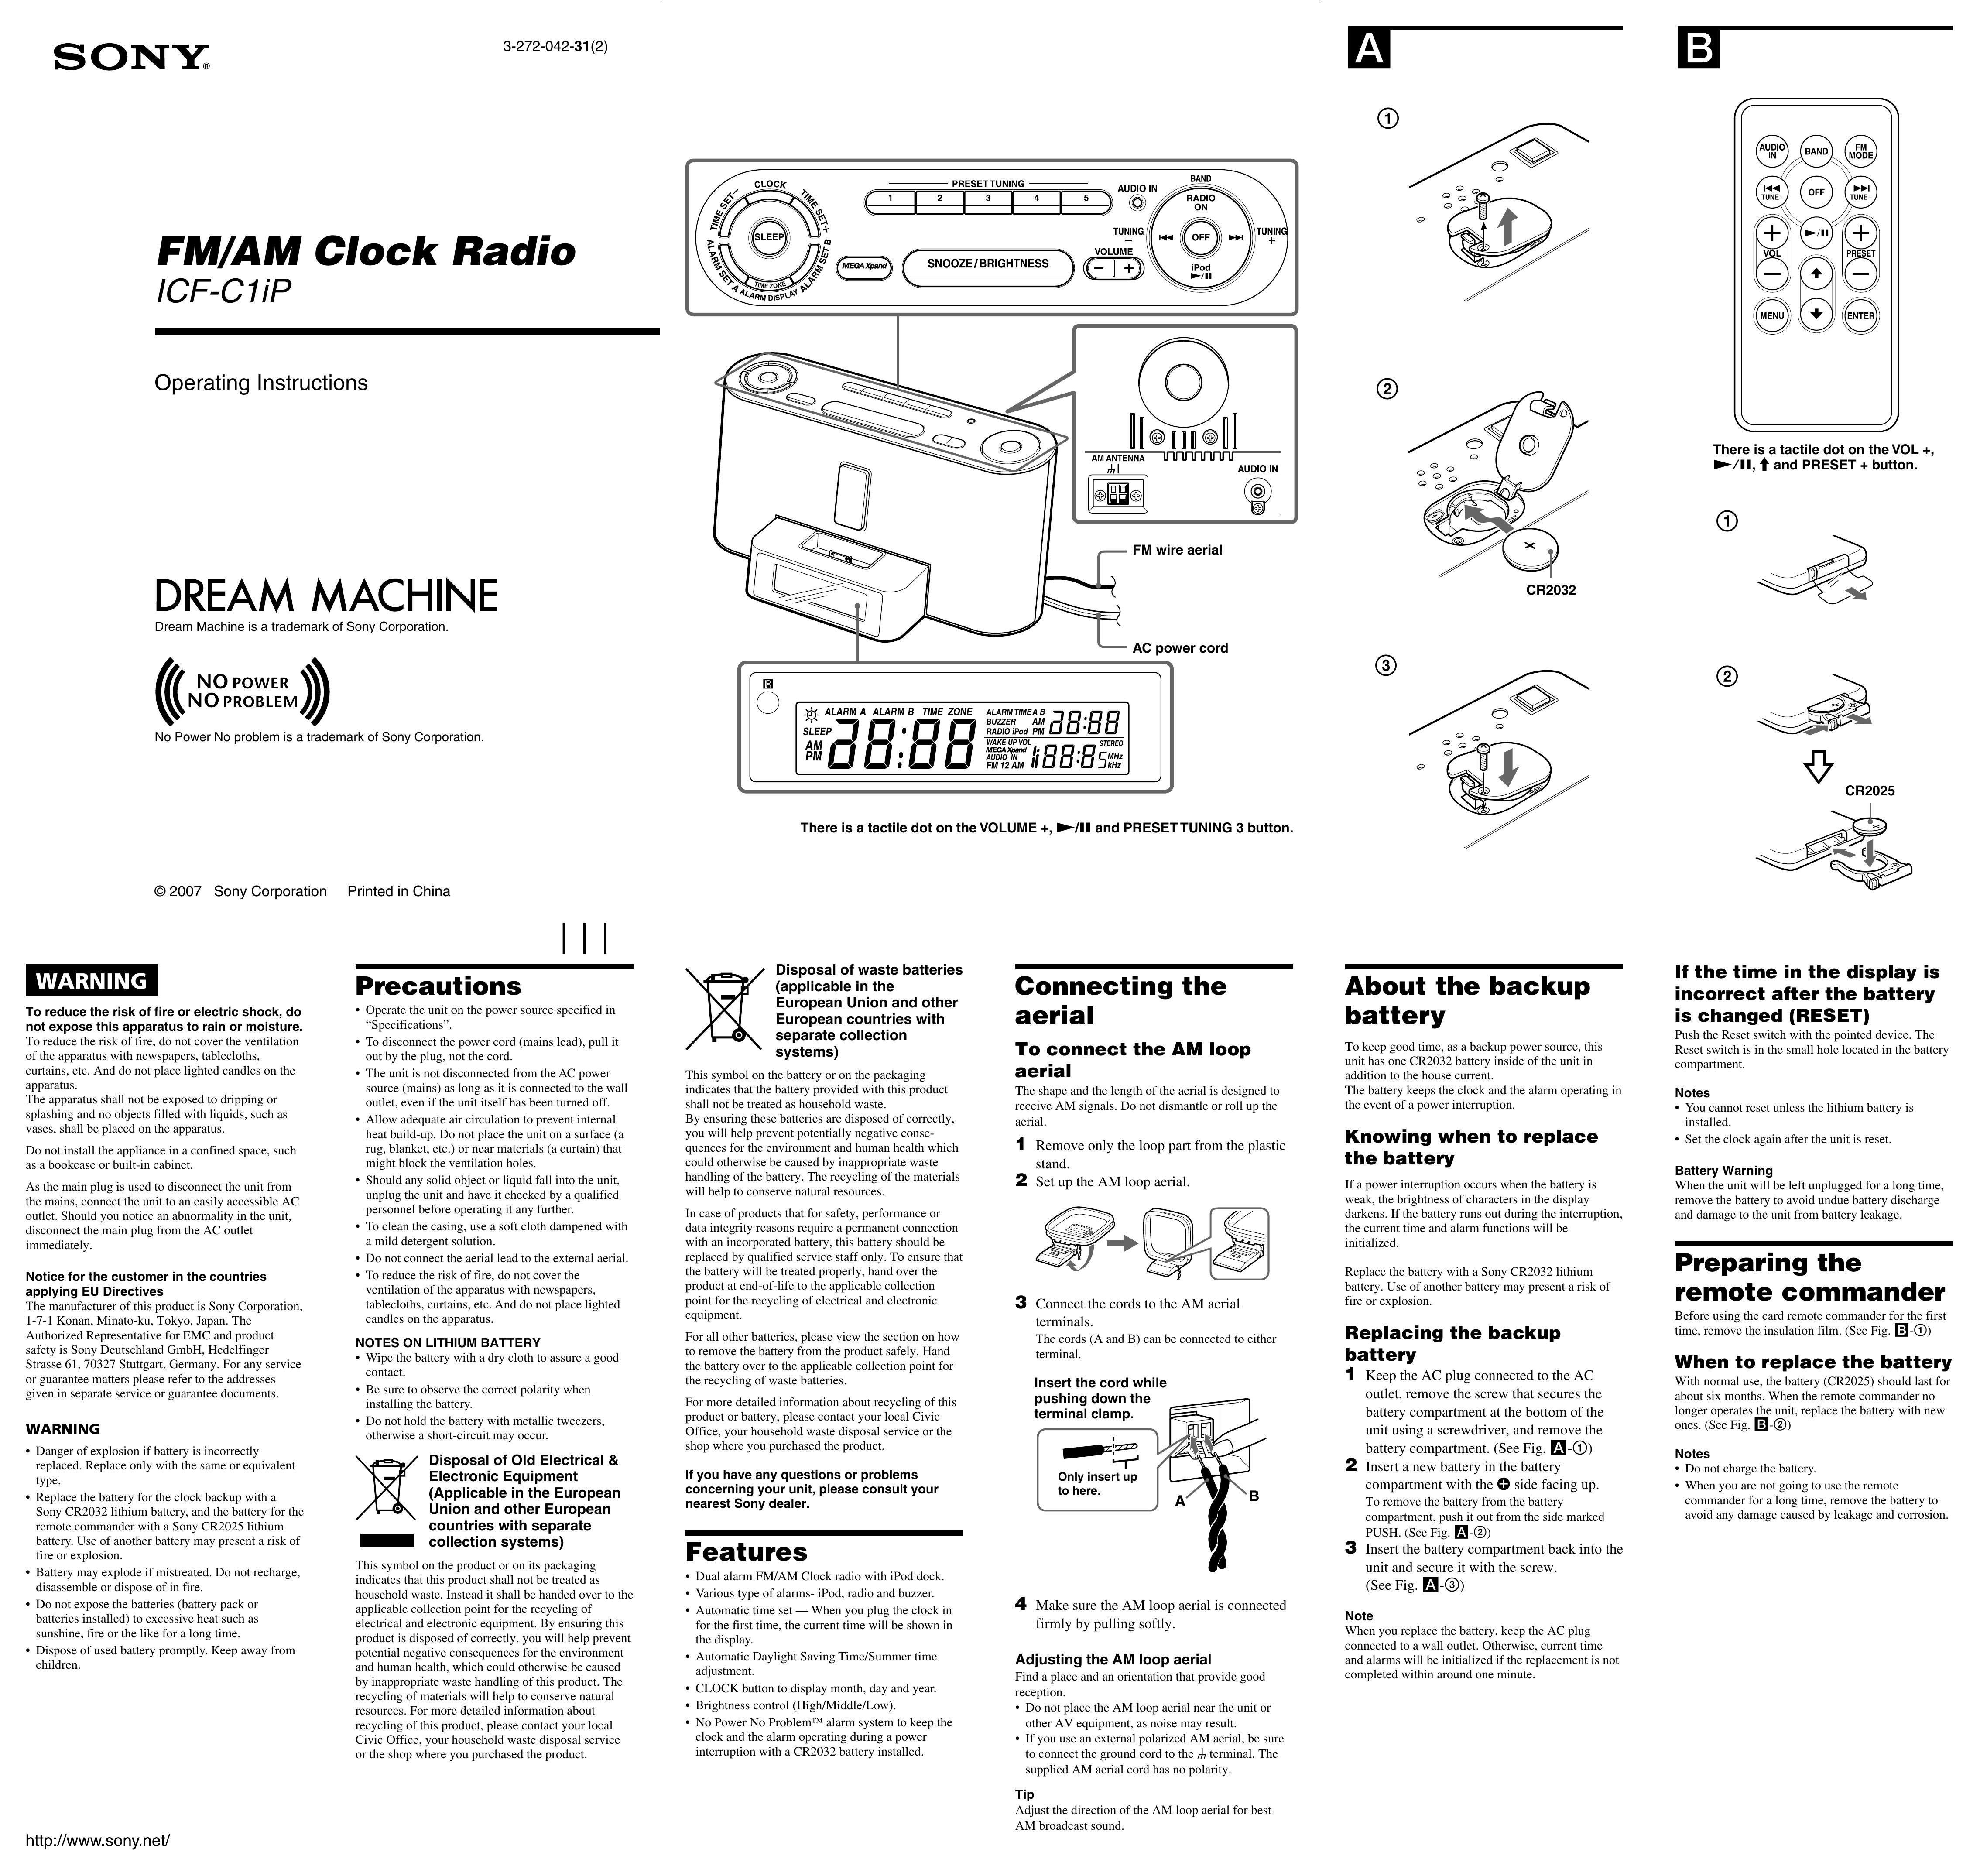 Sony ICF-C1iP Clock Radio User Manual